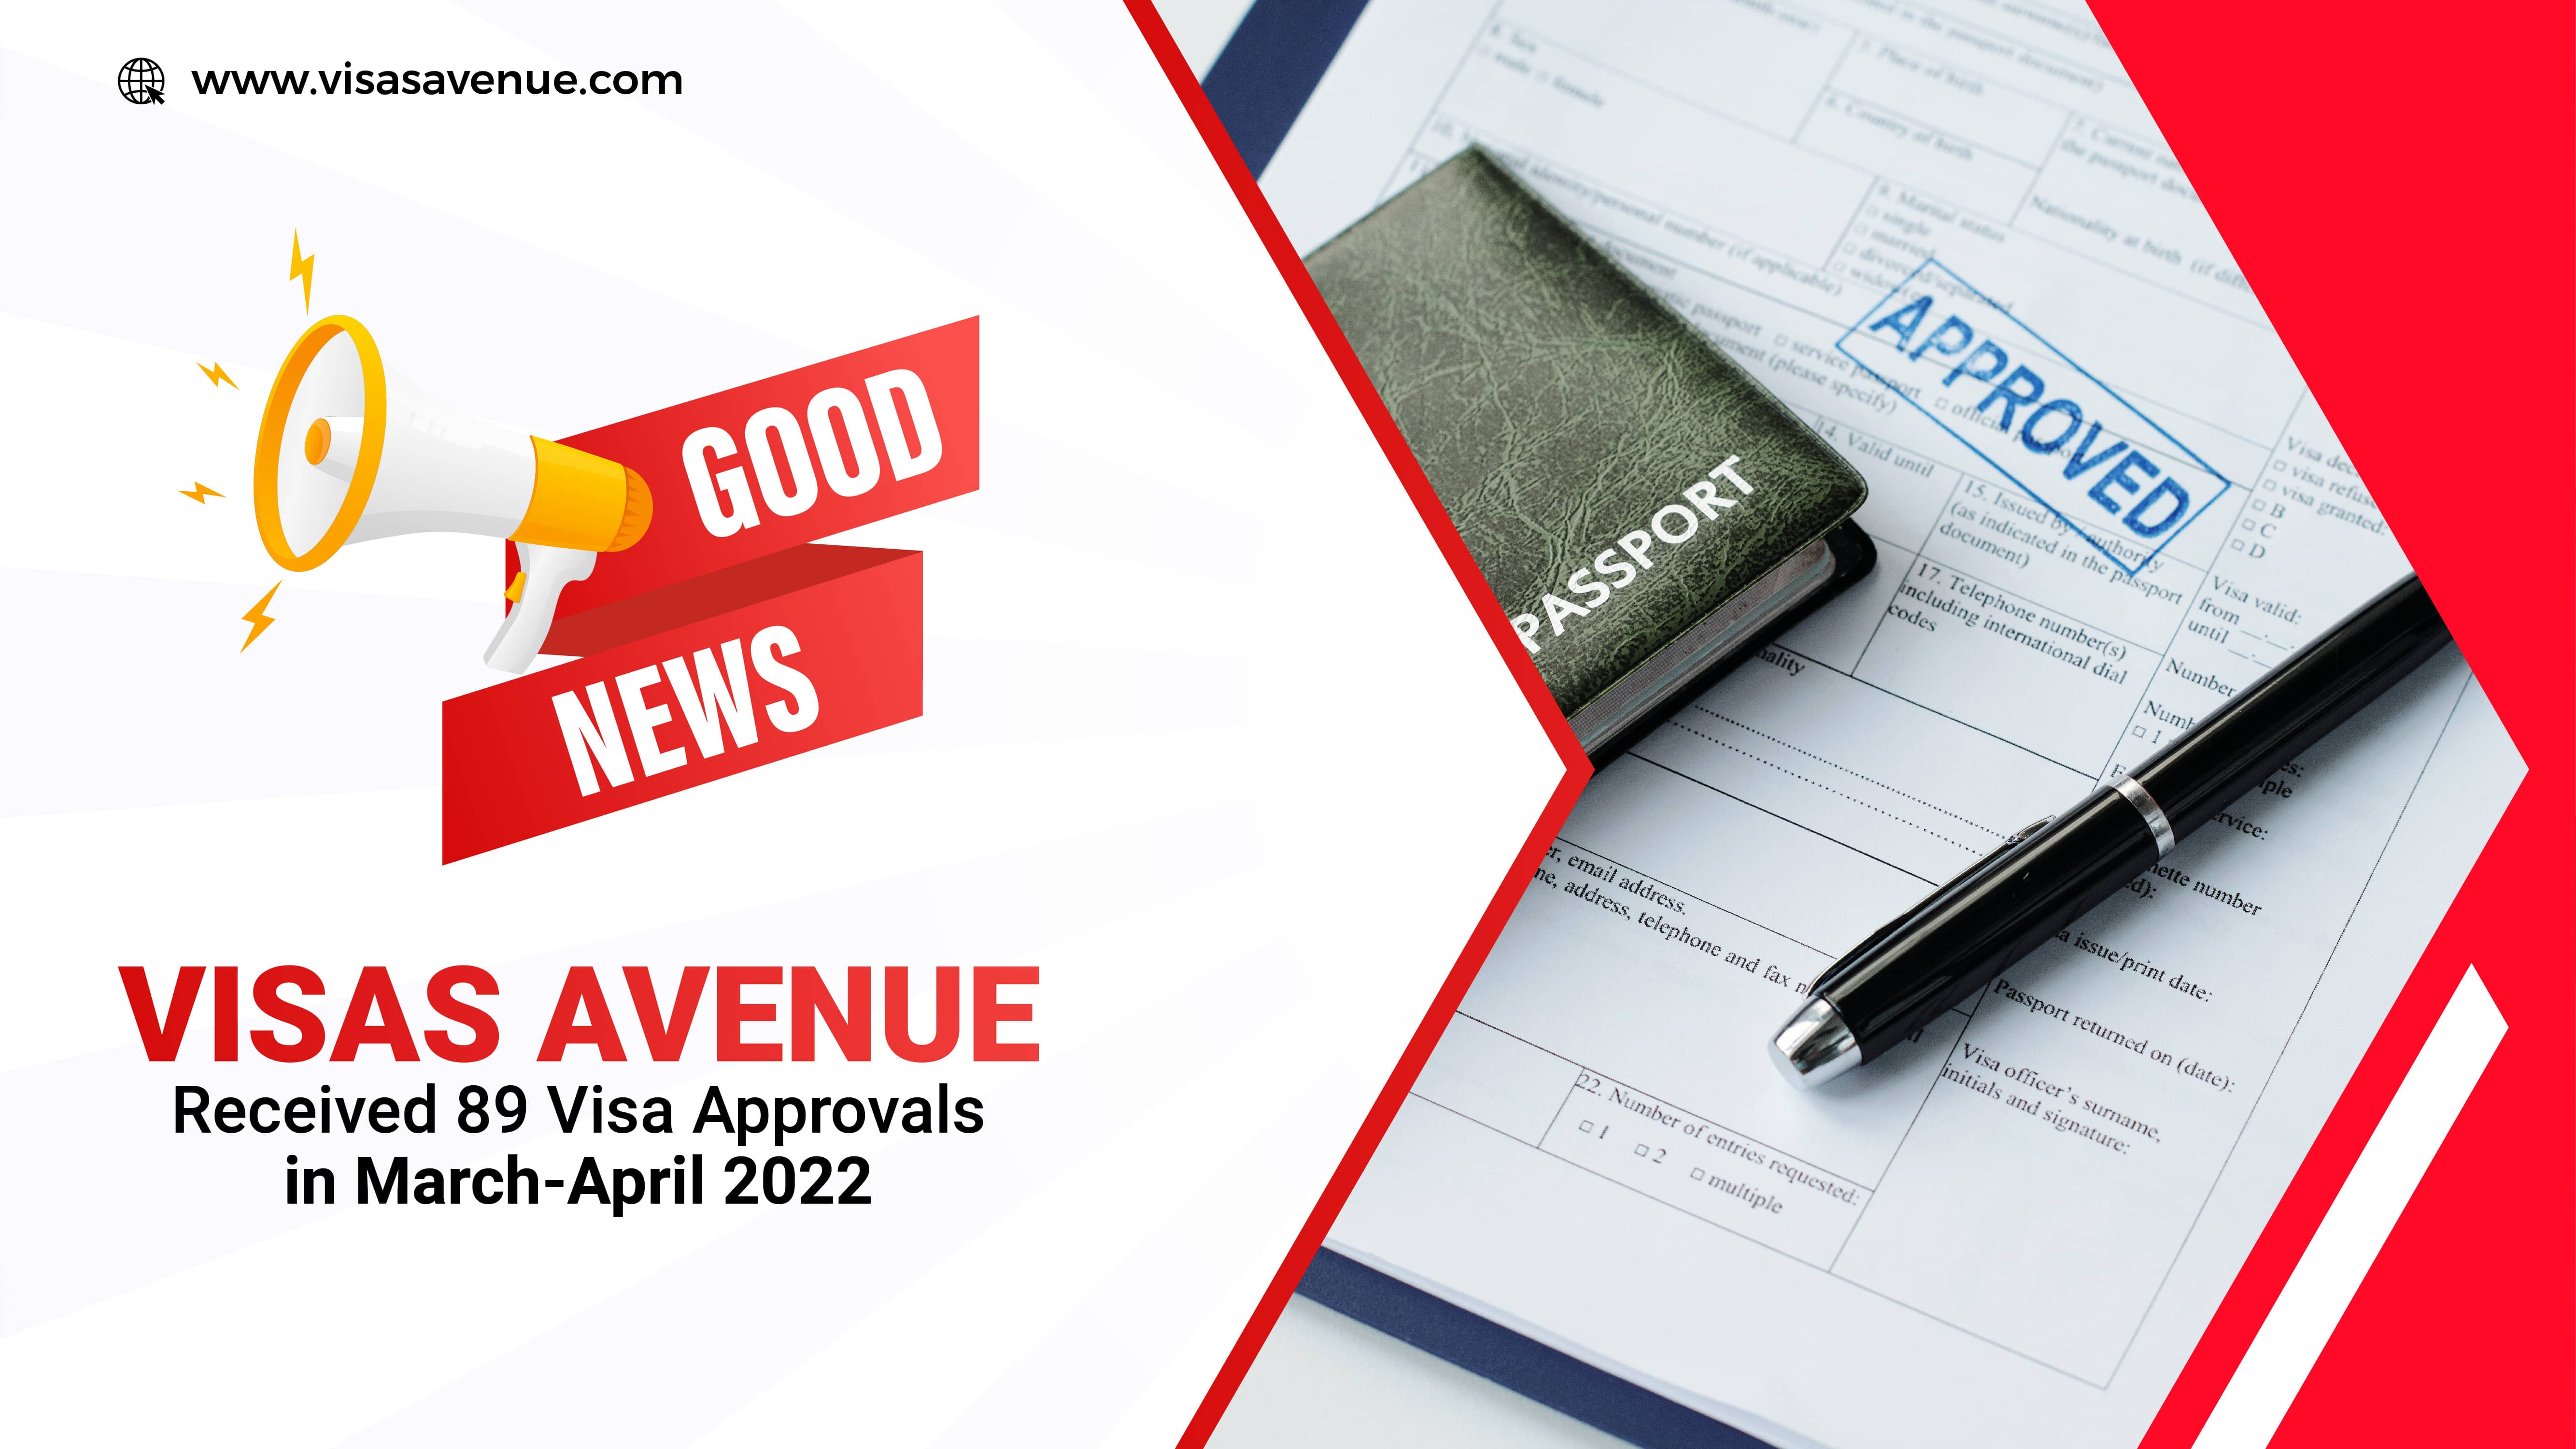 Good News! Visas Avenue received 89 Visa Approvals in March-April 2022